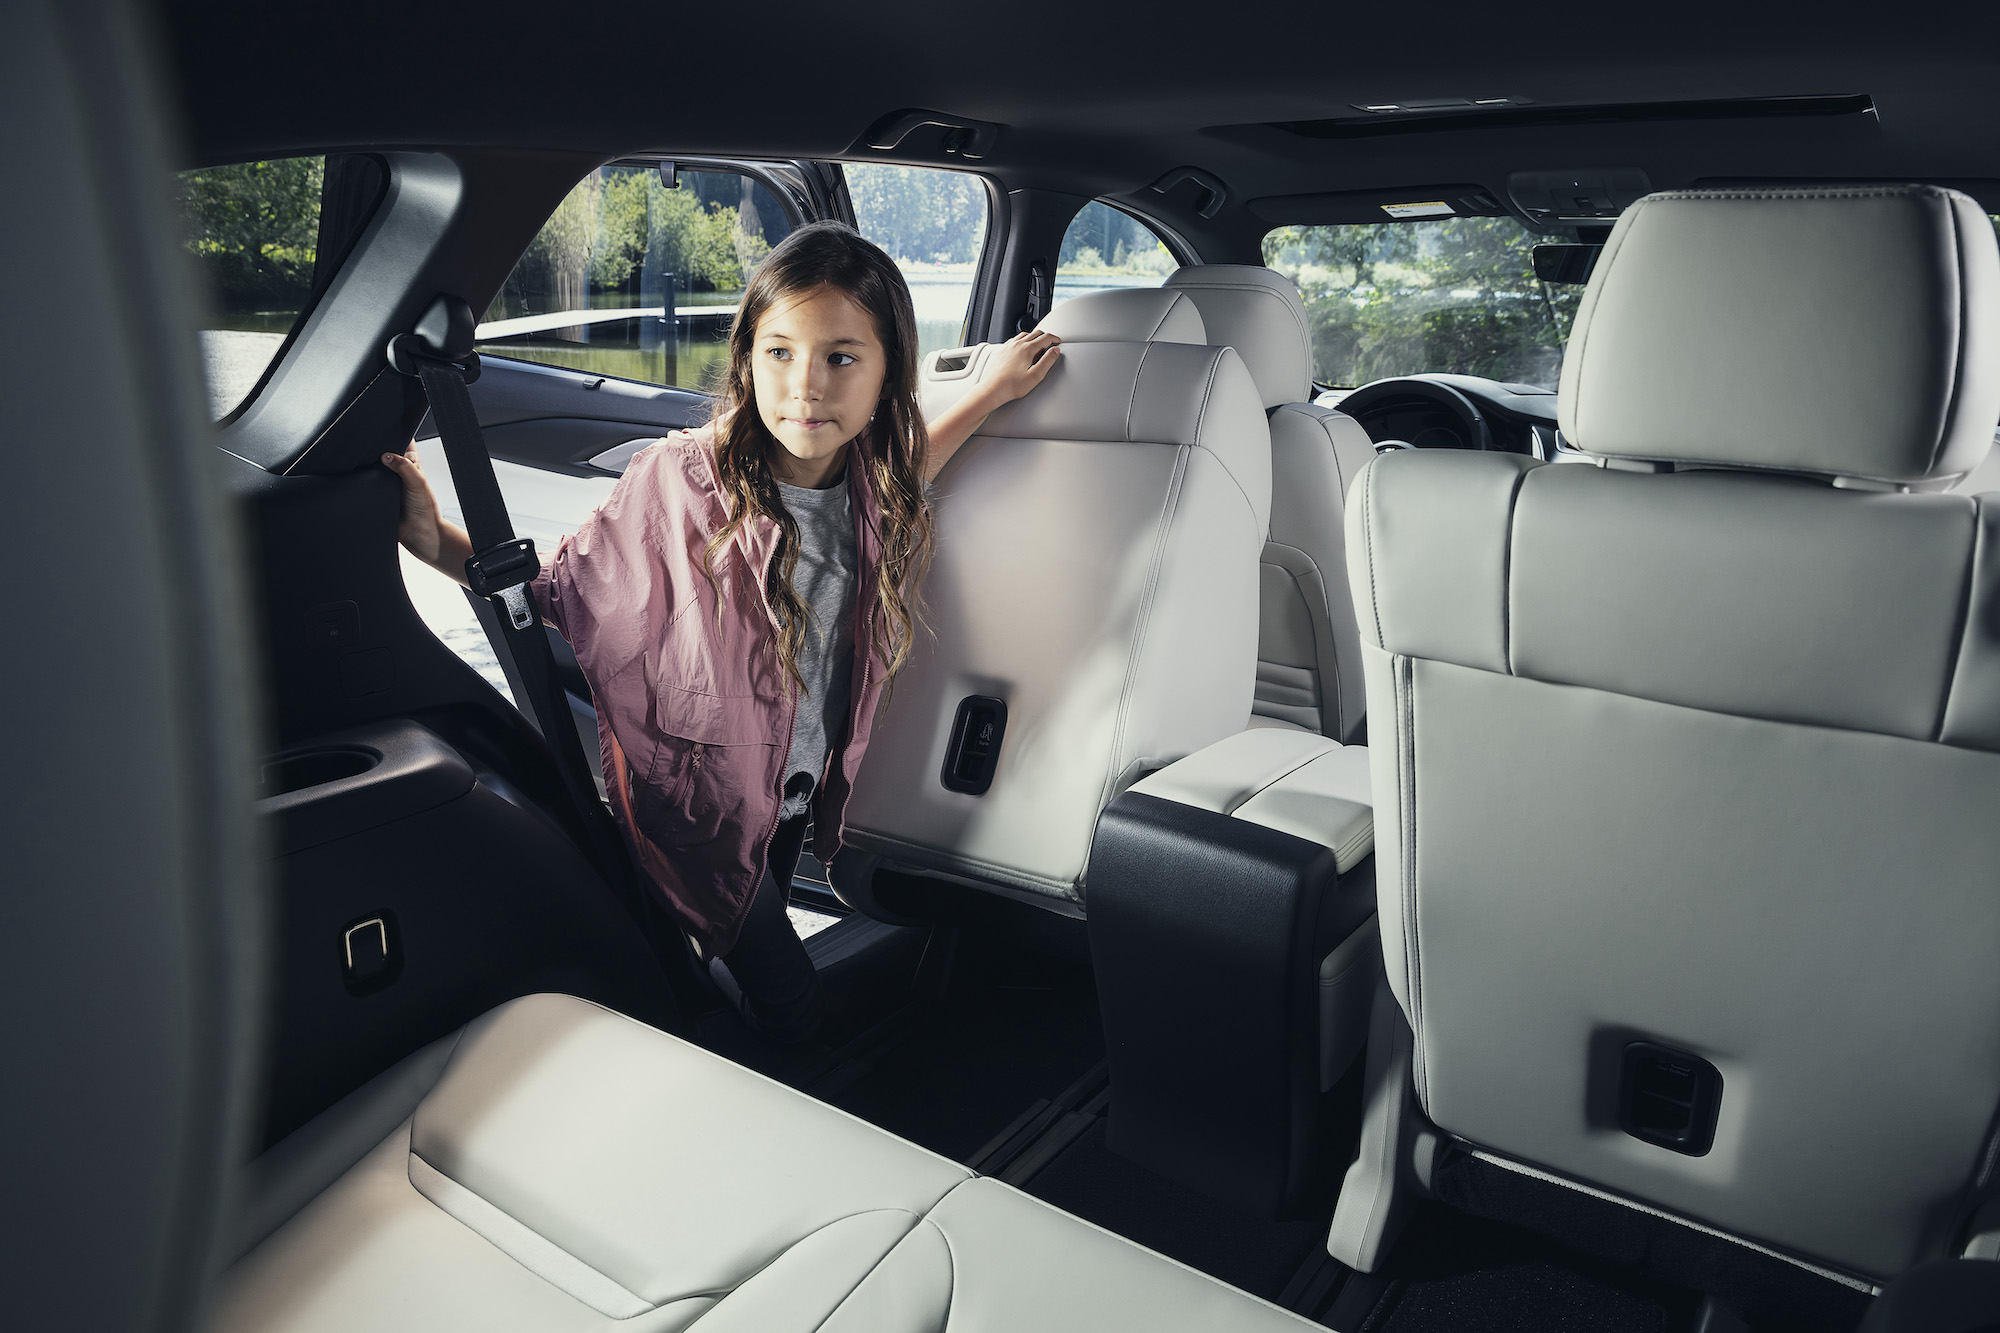 A girl looks inside a 2021 Mazda CX-9 SUV